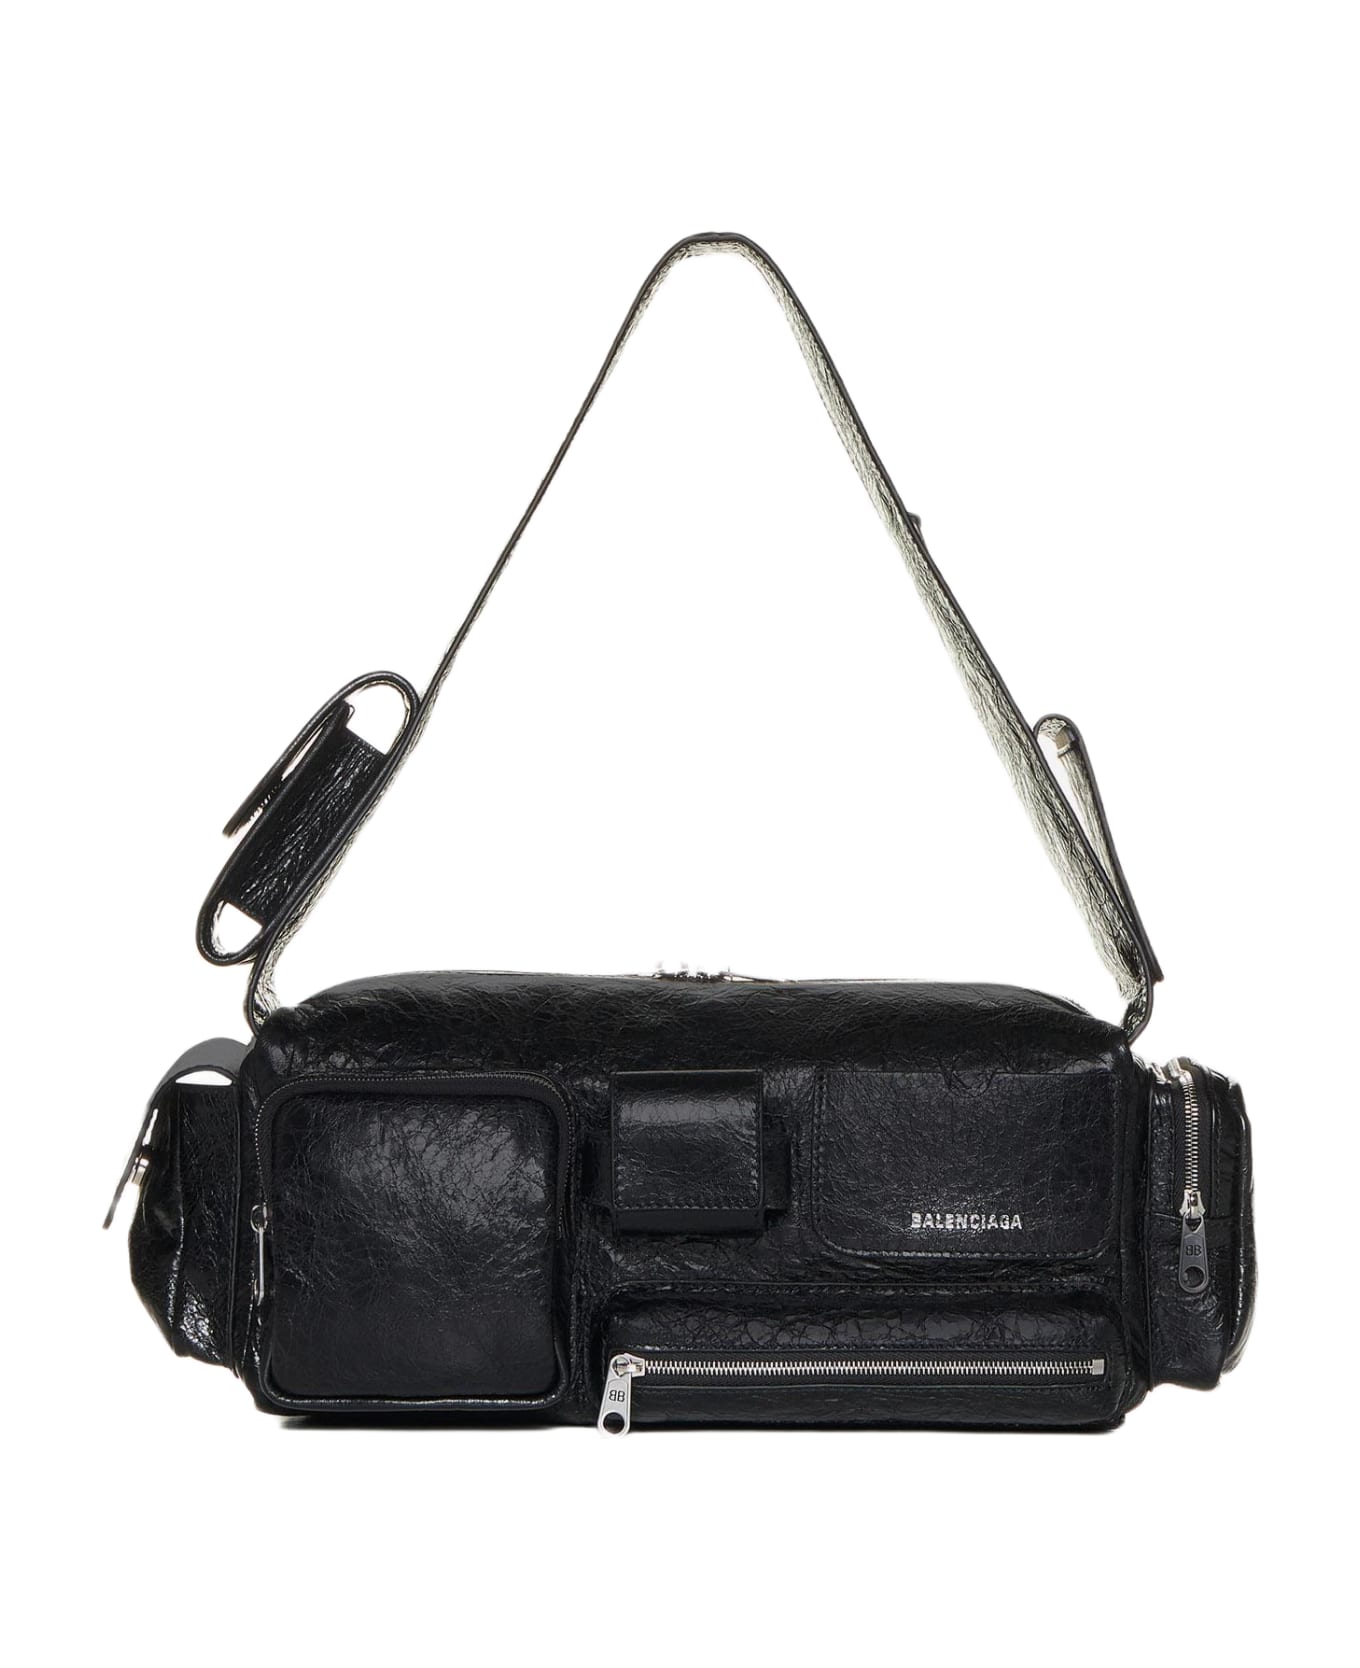 Balenciaga Superbusy Sling S Leather Bag - BLACK